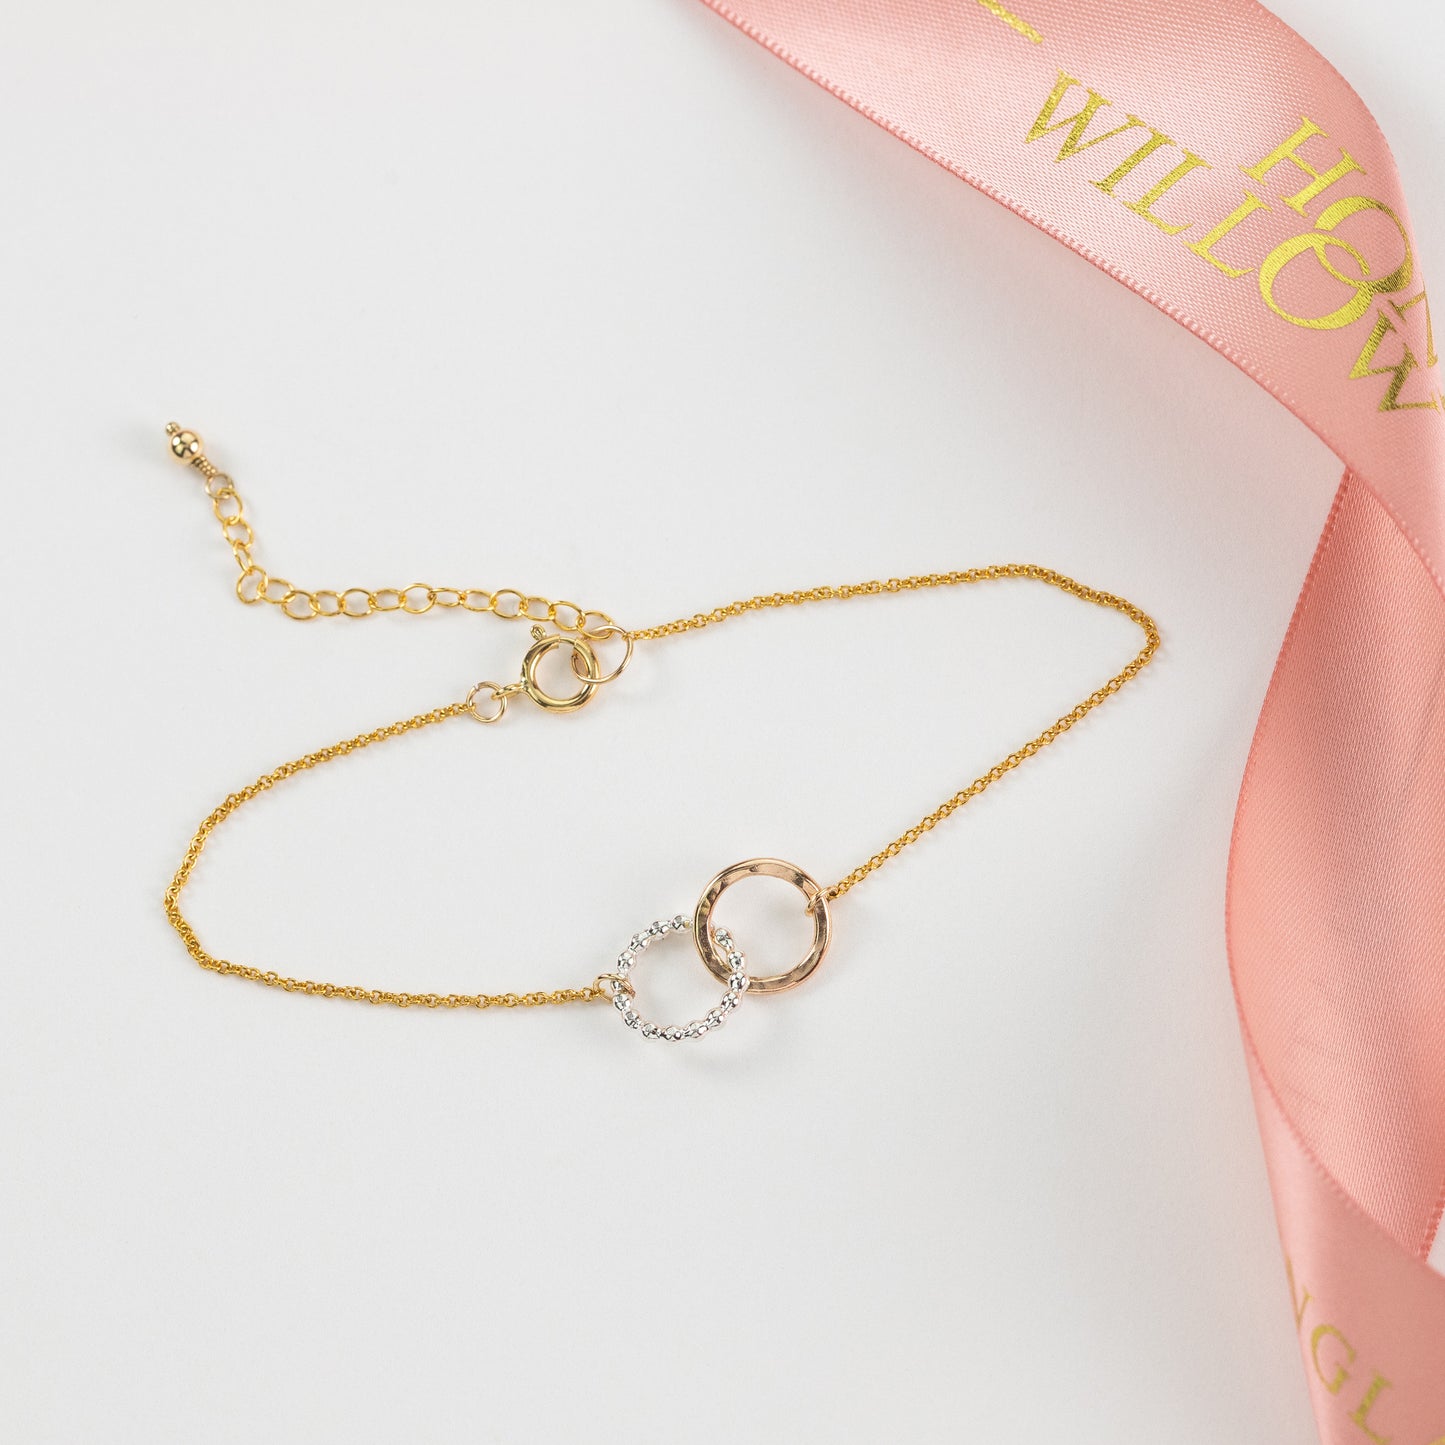 Gift for Sister - Love Link Bracelet - Linked for a Lifetime - Silver & Gold